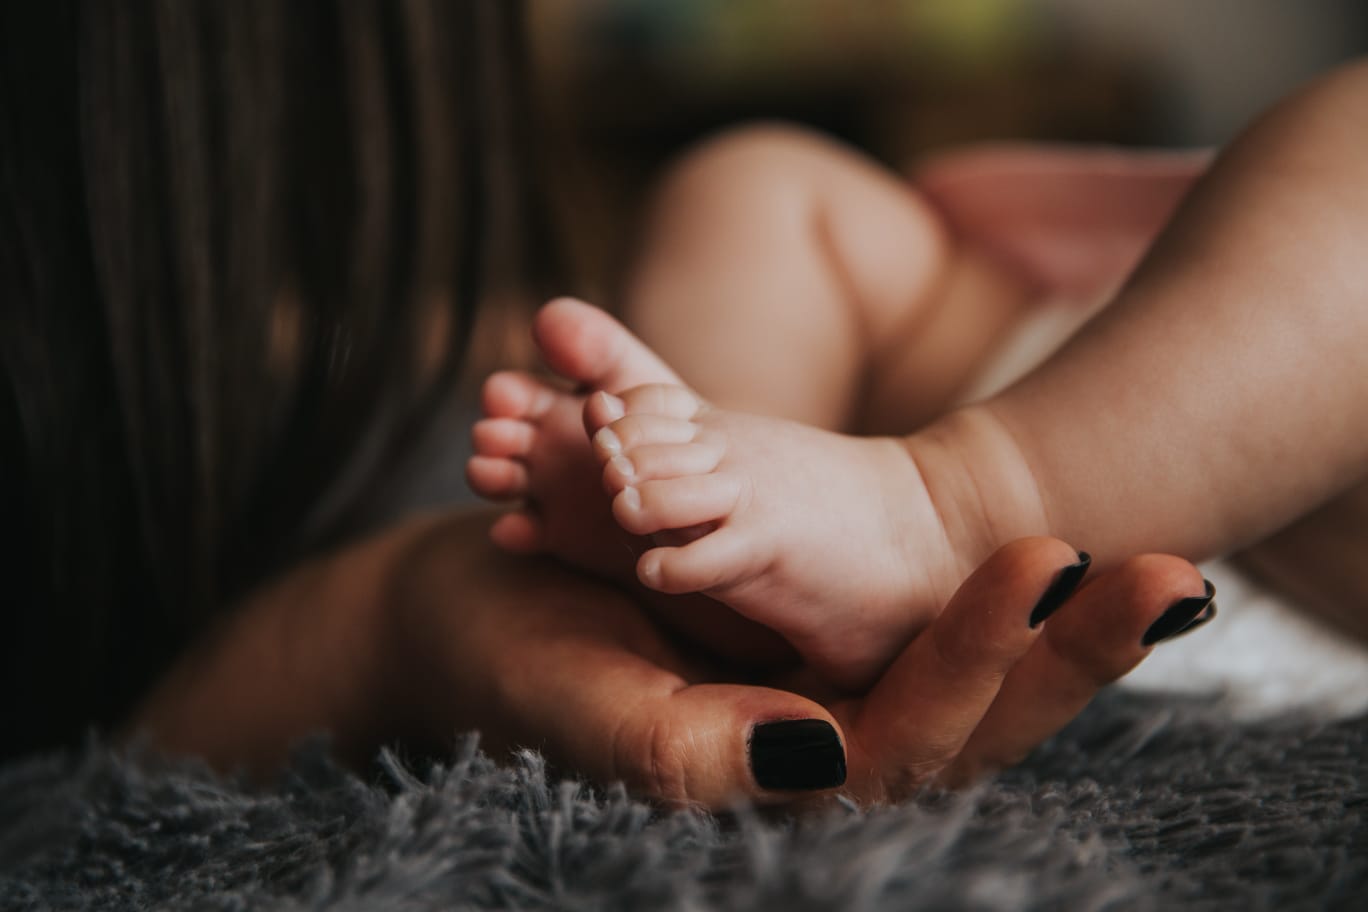 pieds de bébé dans la main de maman